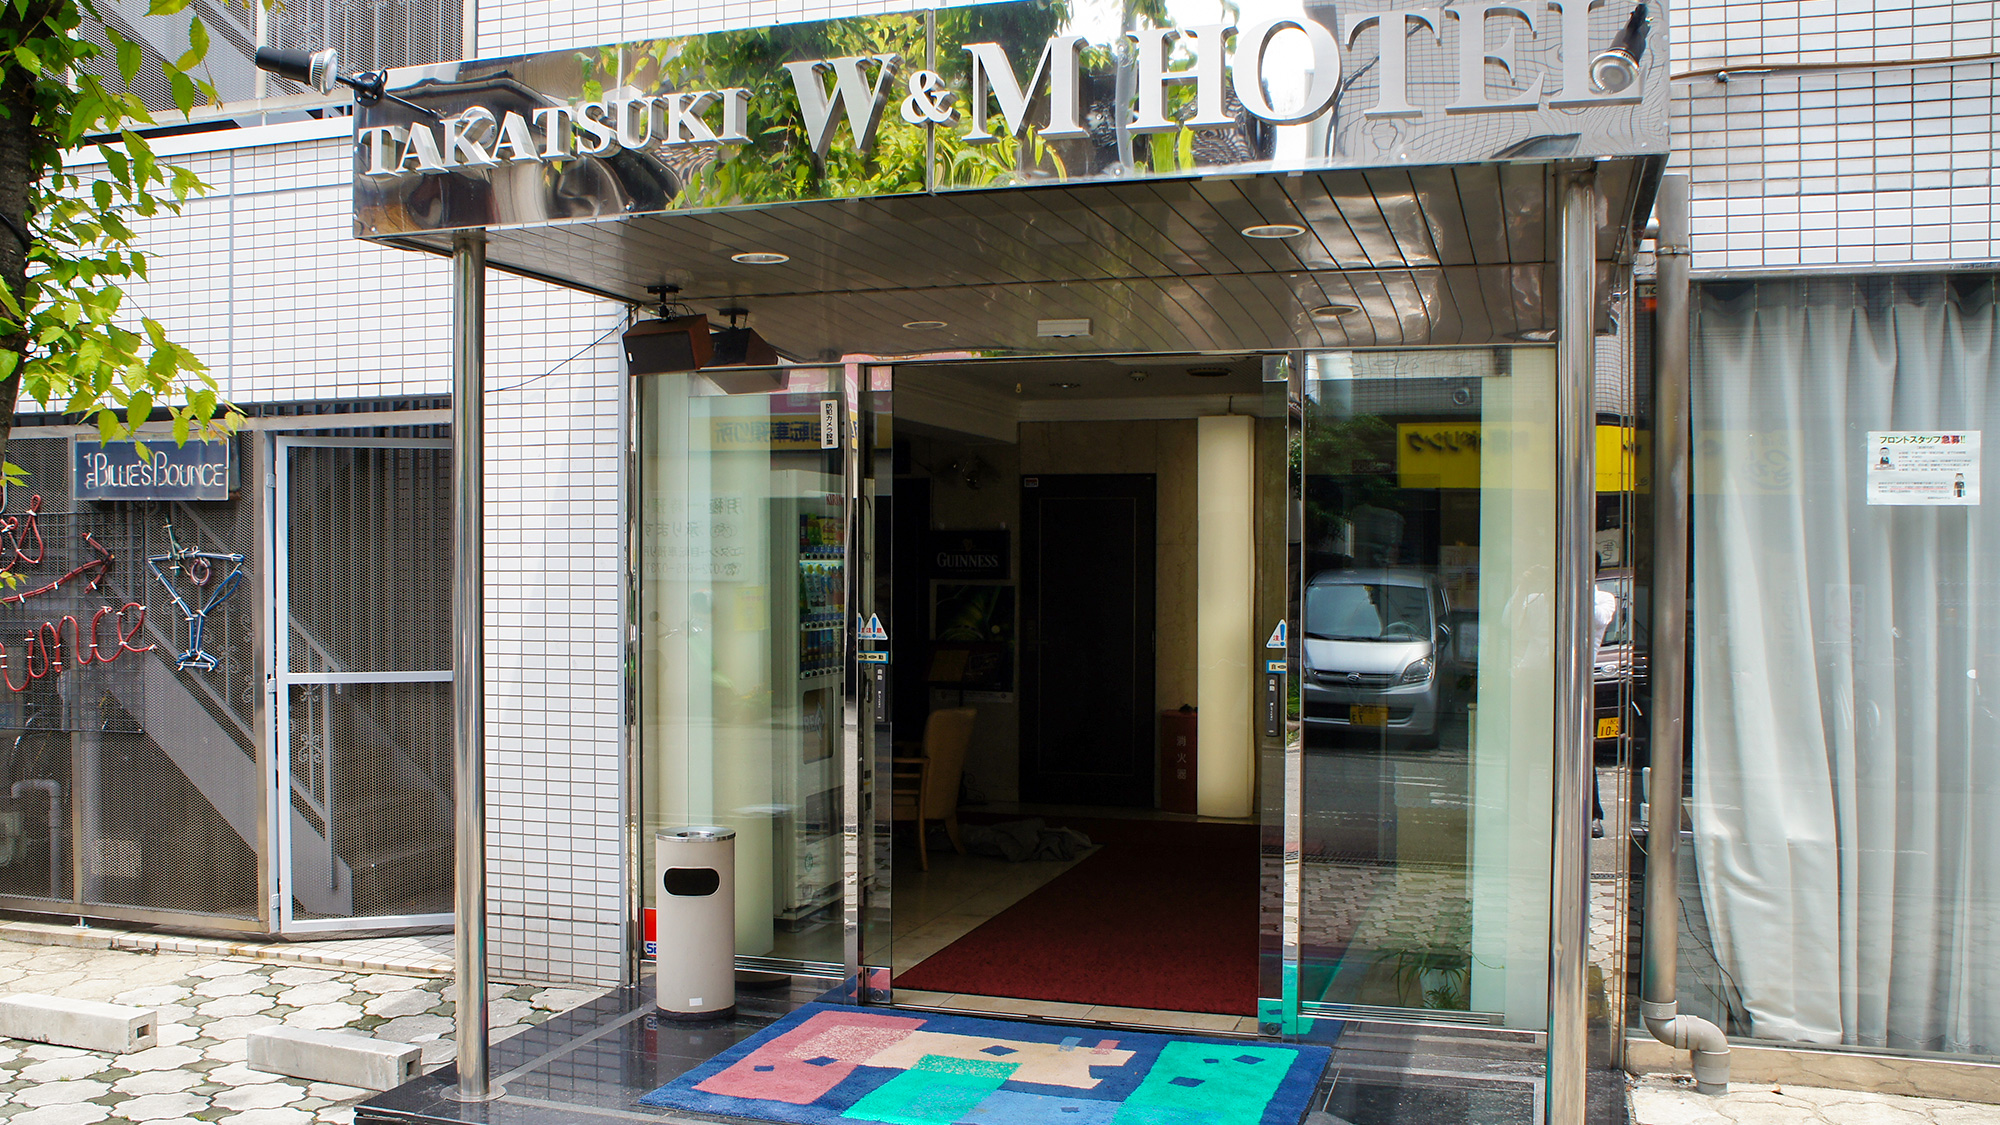 Takatsuki W&M Hotel